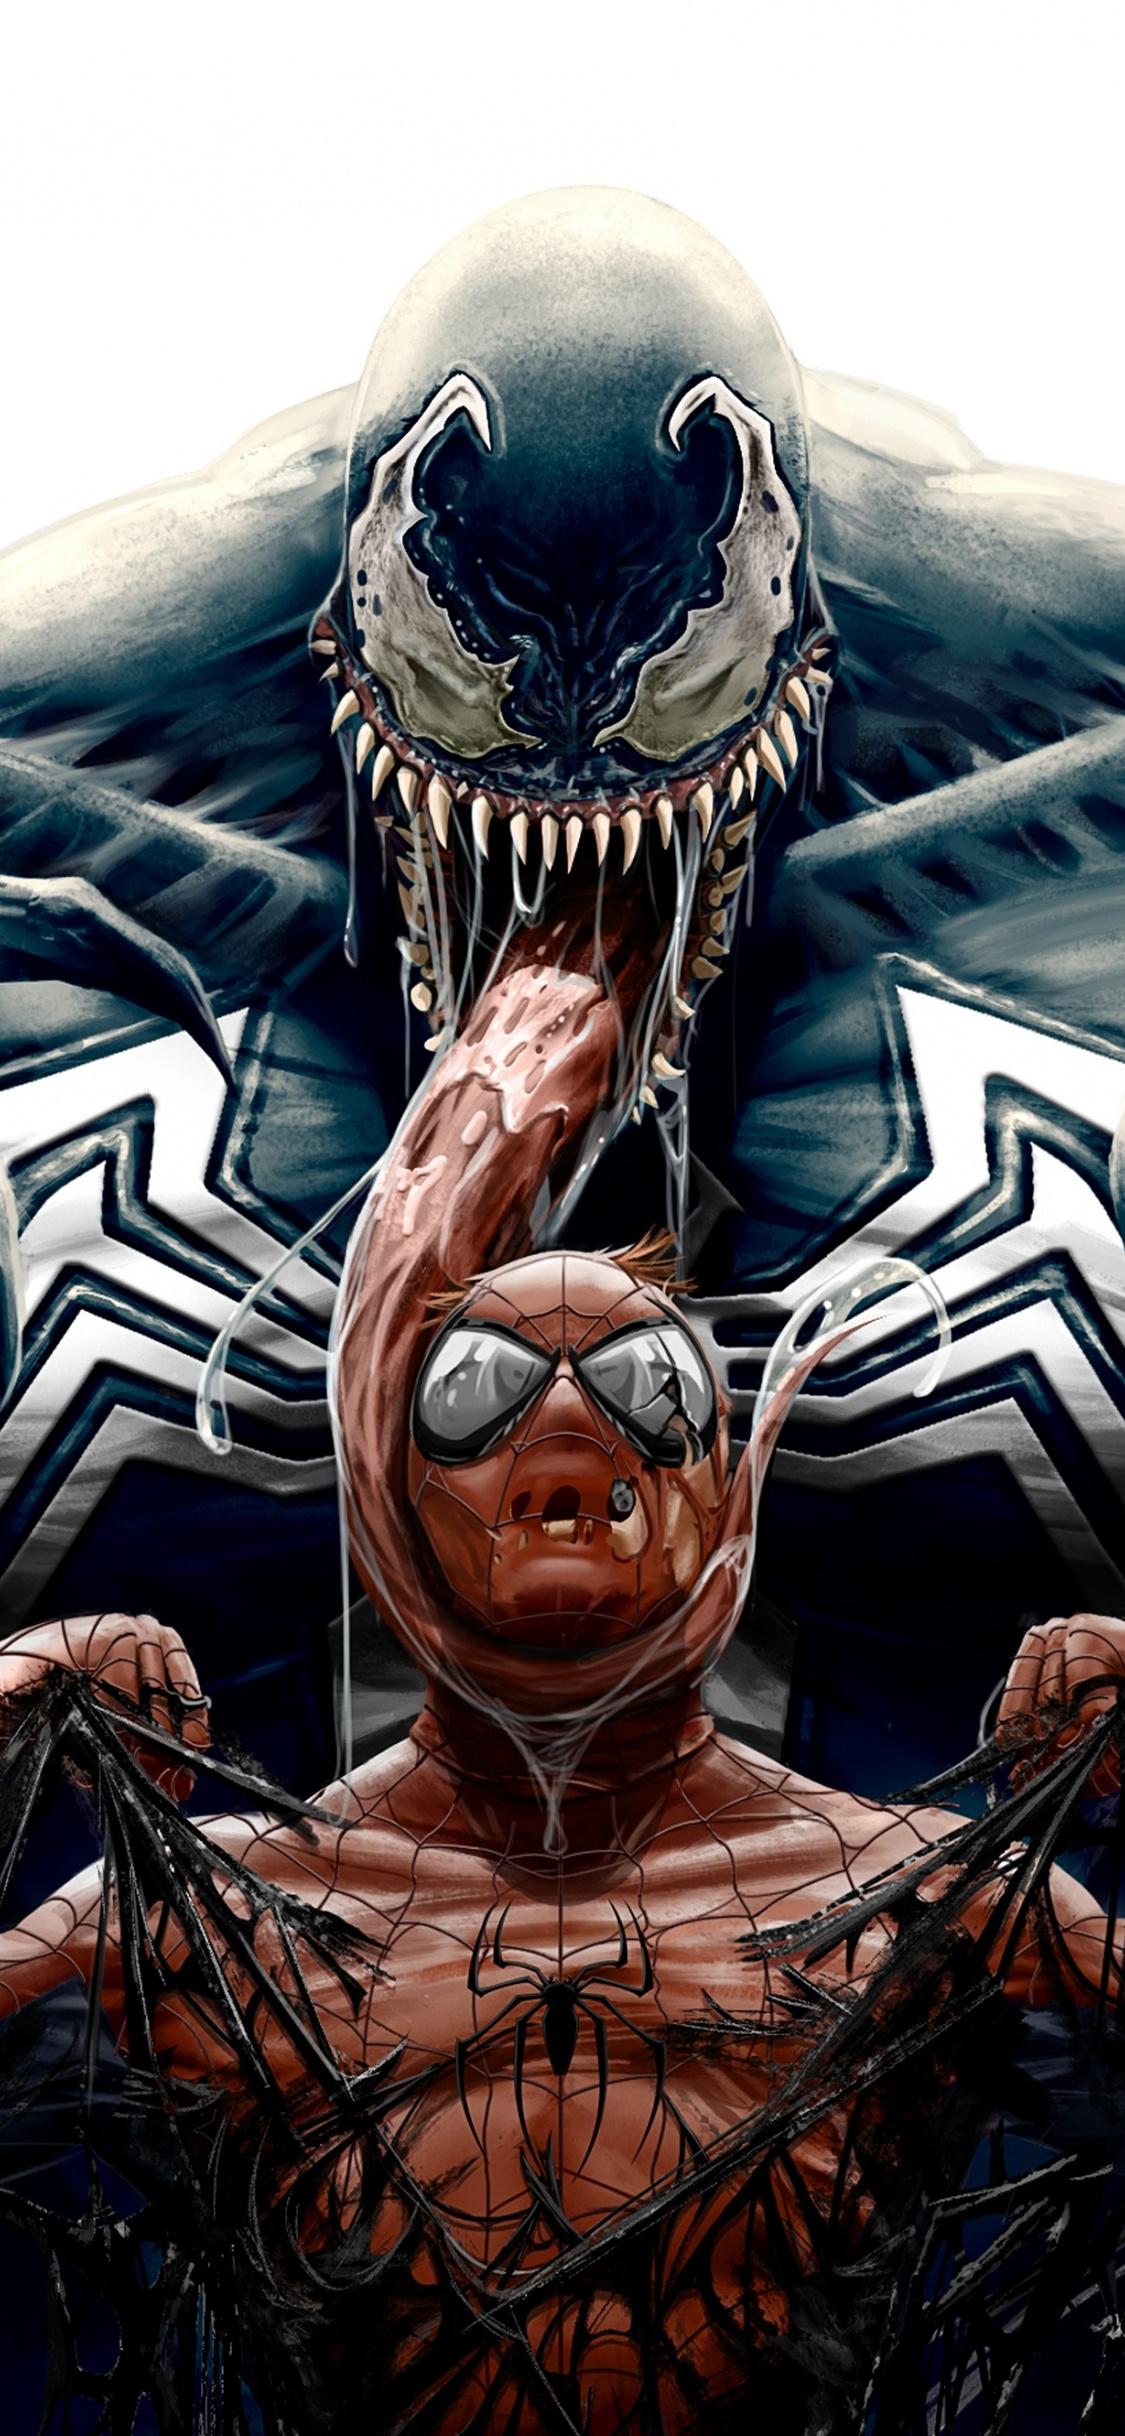 Download Spider Man, Venom, Marvel Comics, Superheroes, Art 1125x2436 Wallpaper, Iphone X, 1125x2436 HD Image, Background, 10336